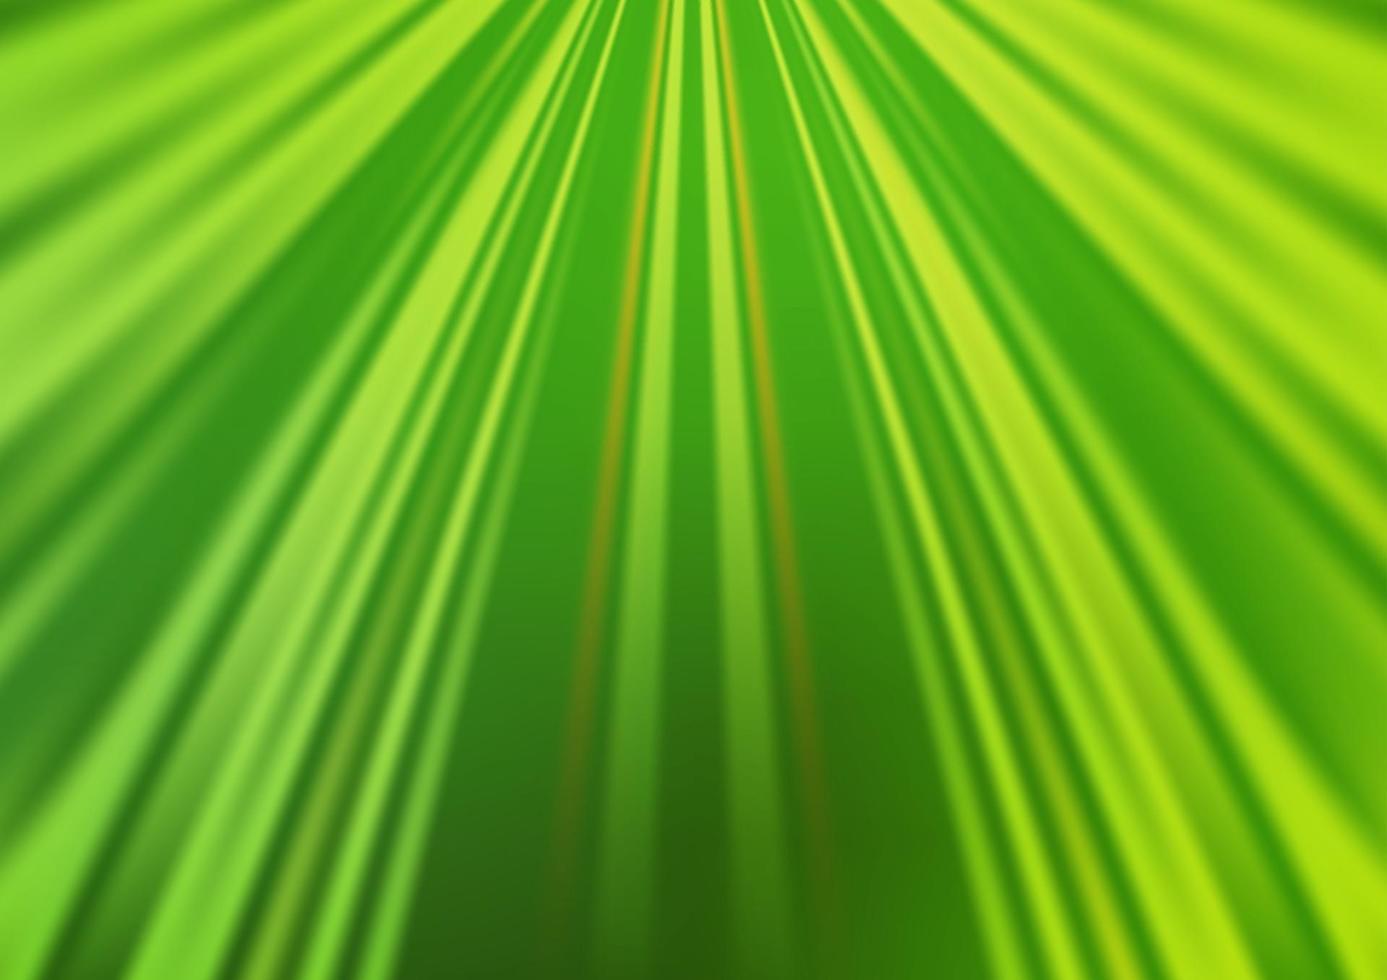 hellgrüne Vektortextur mit farbigen Linien. vektor